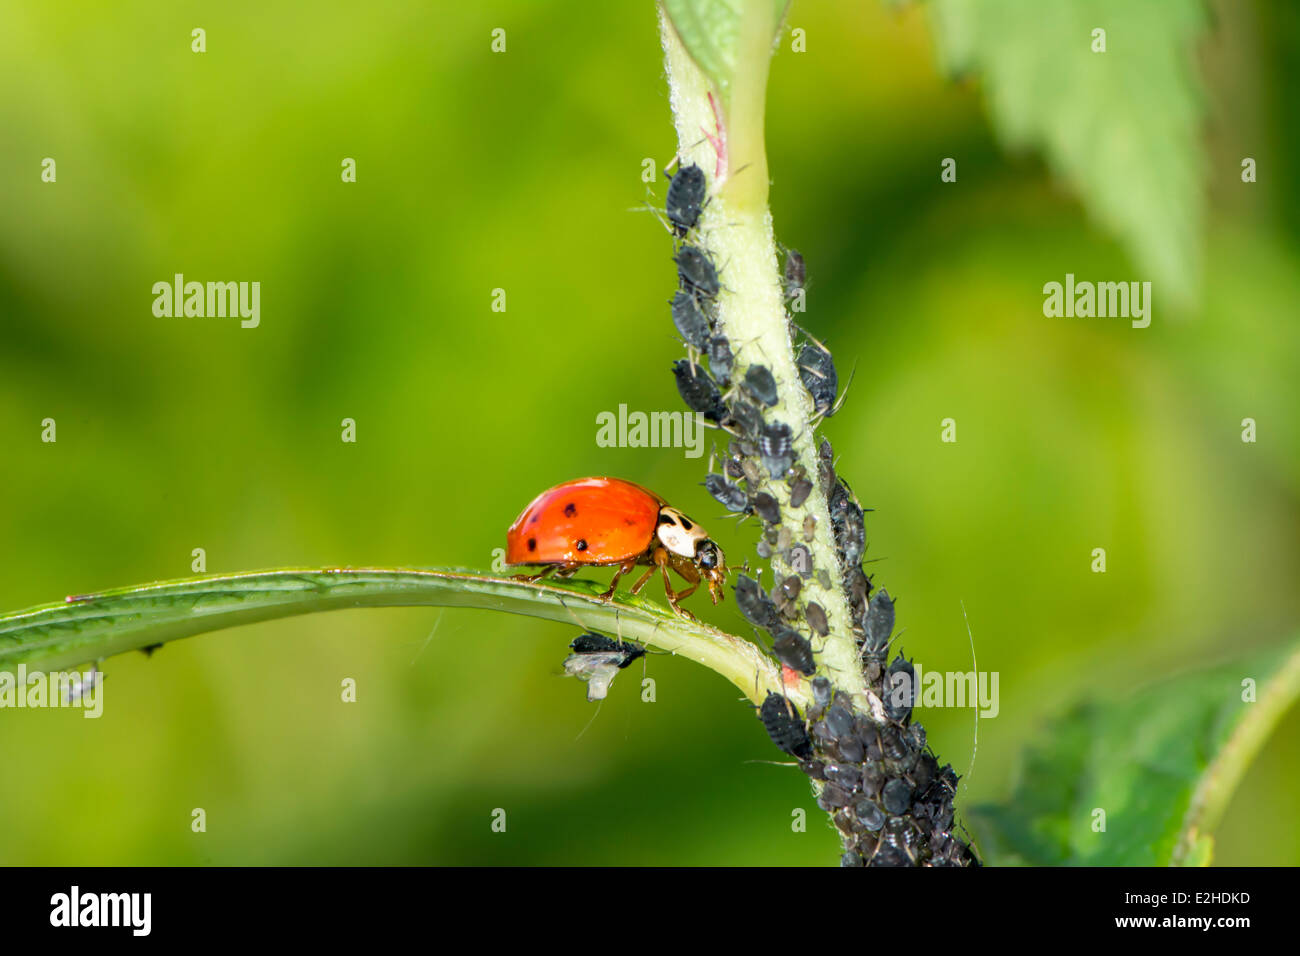 Lotta biologica contro i parassiti - ladybug mangiare i pidocchi Foto Stock